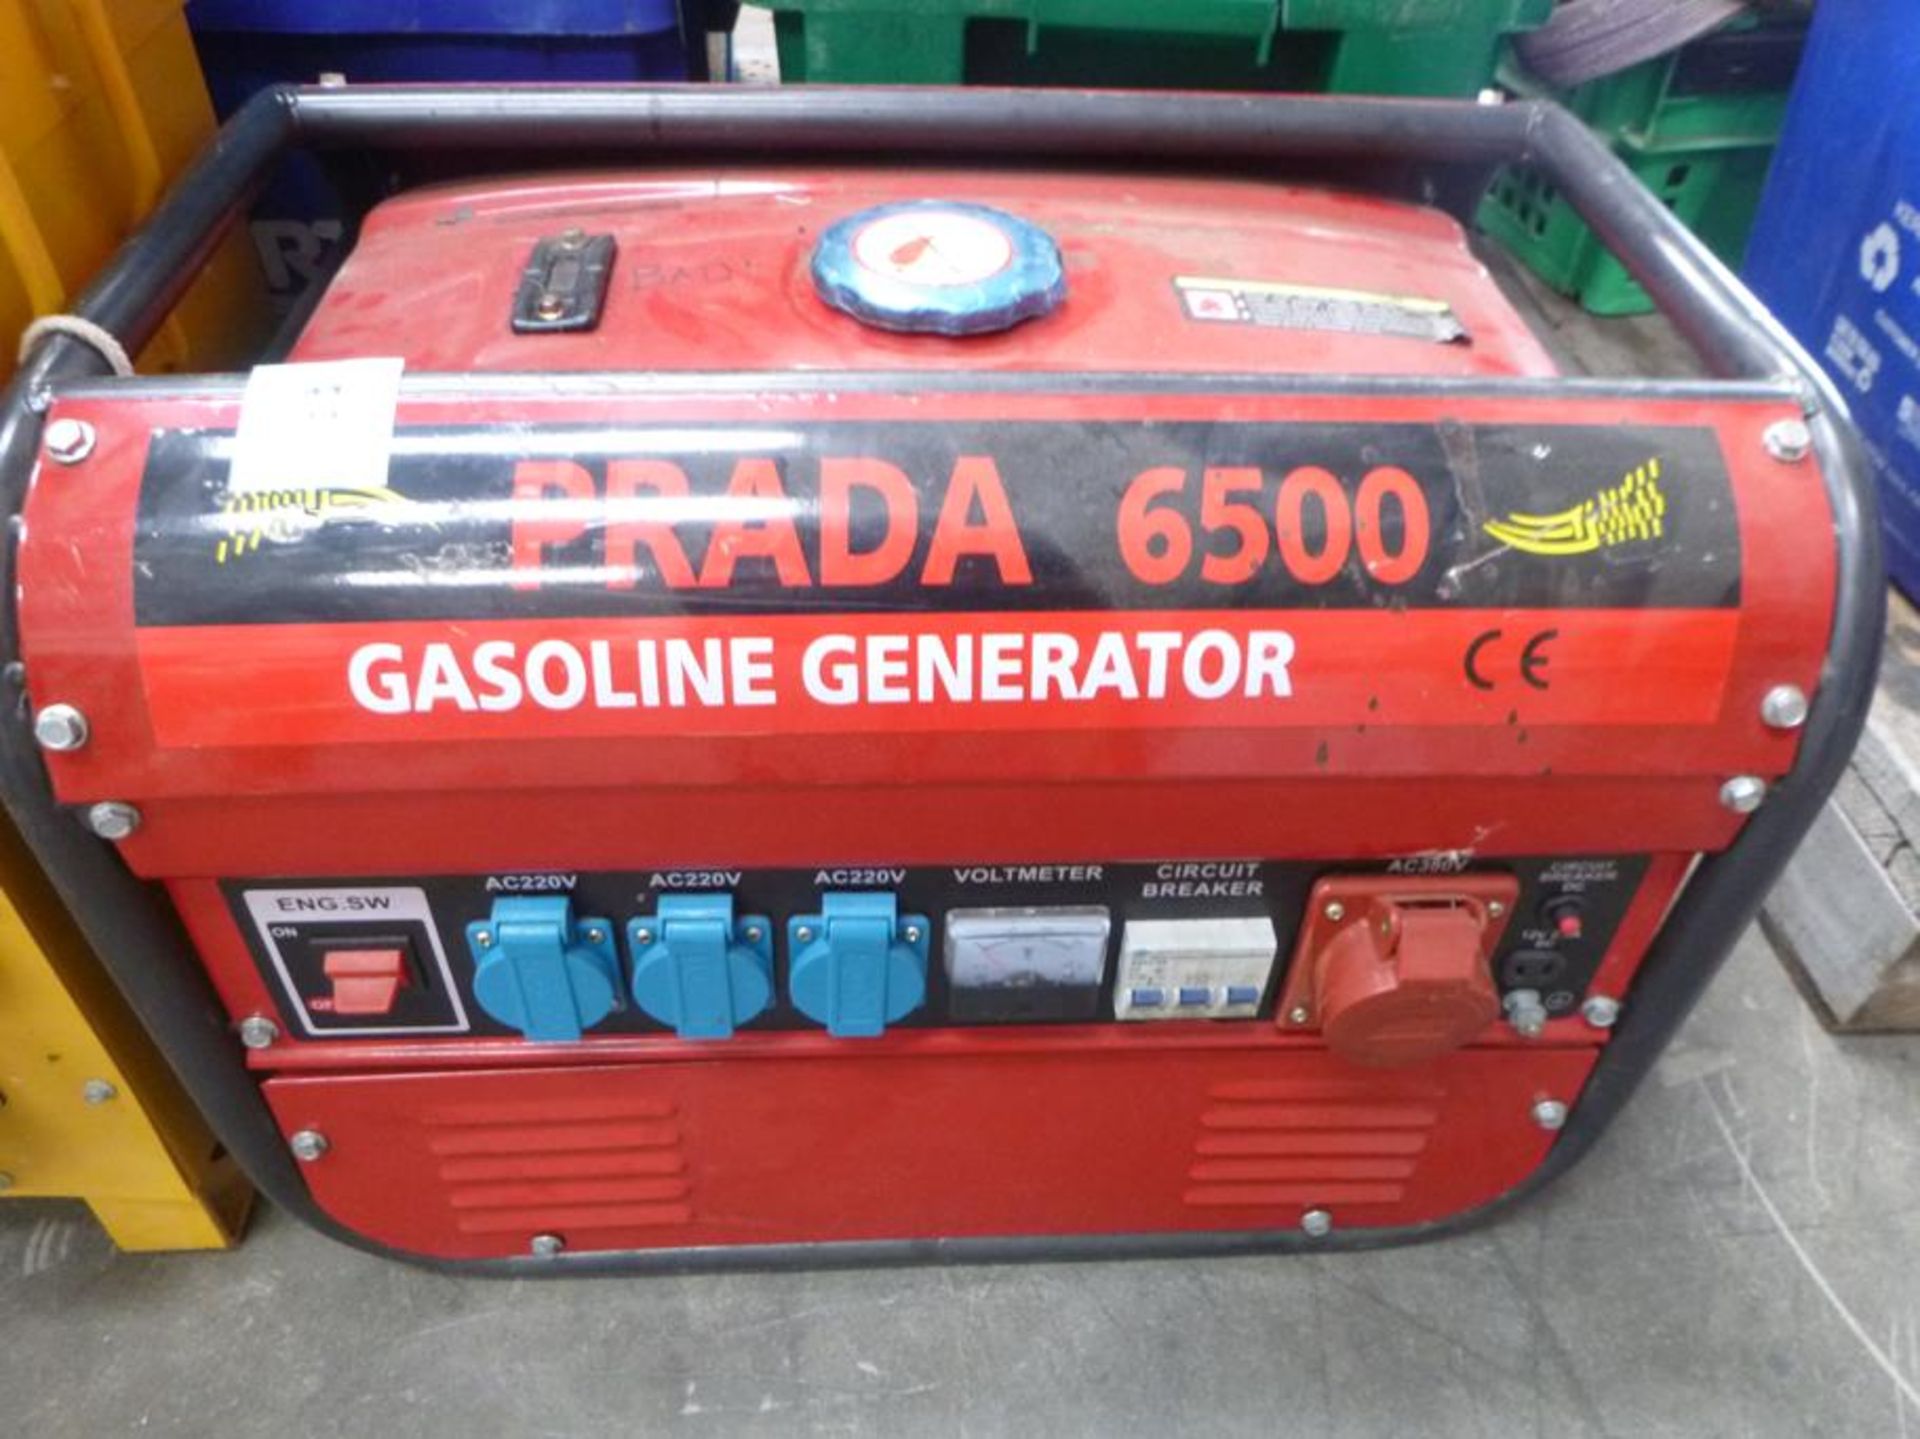 Prada 6500 Gasoline Generator